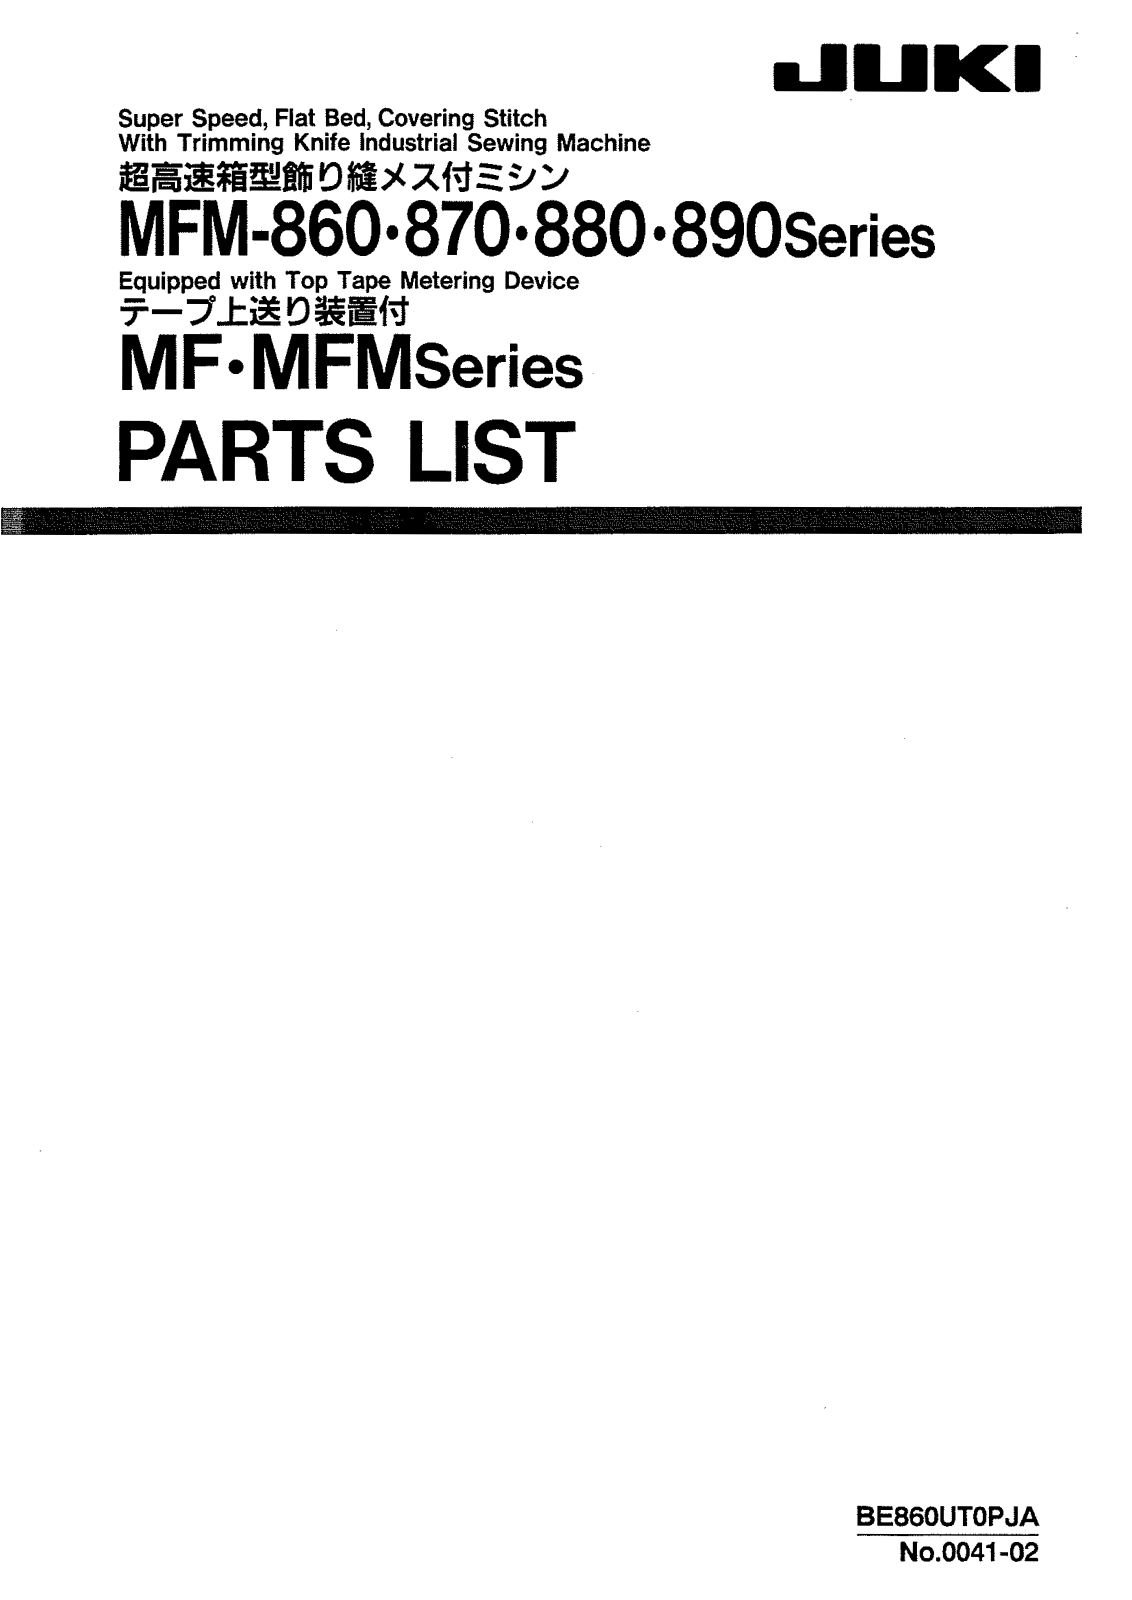 Juki MFM-860, MFM-870, MFM-880, MFM-890 Parts List